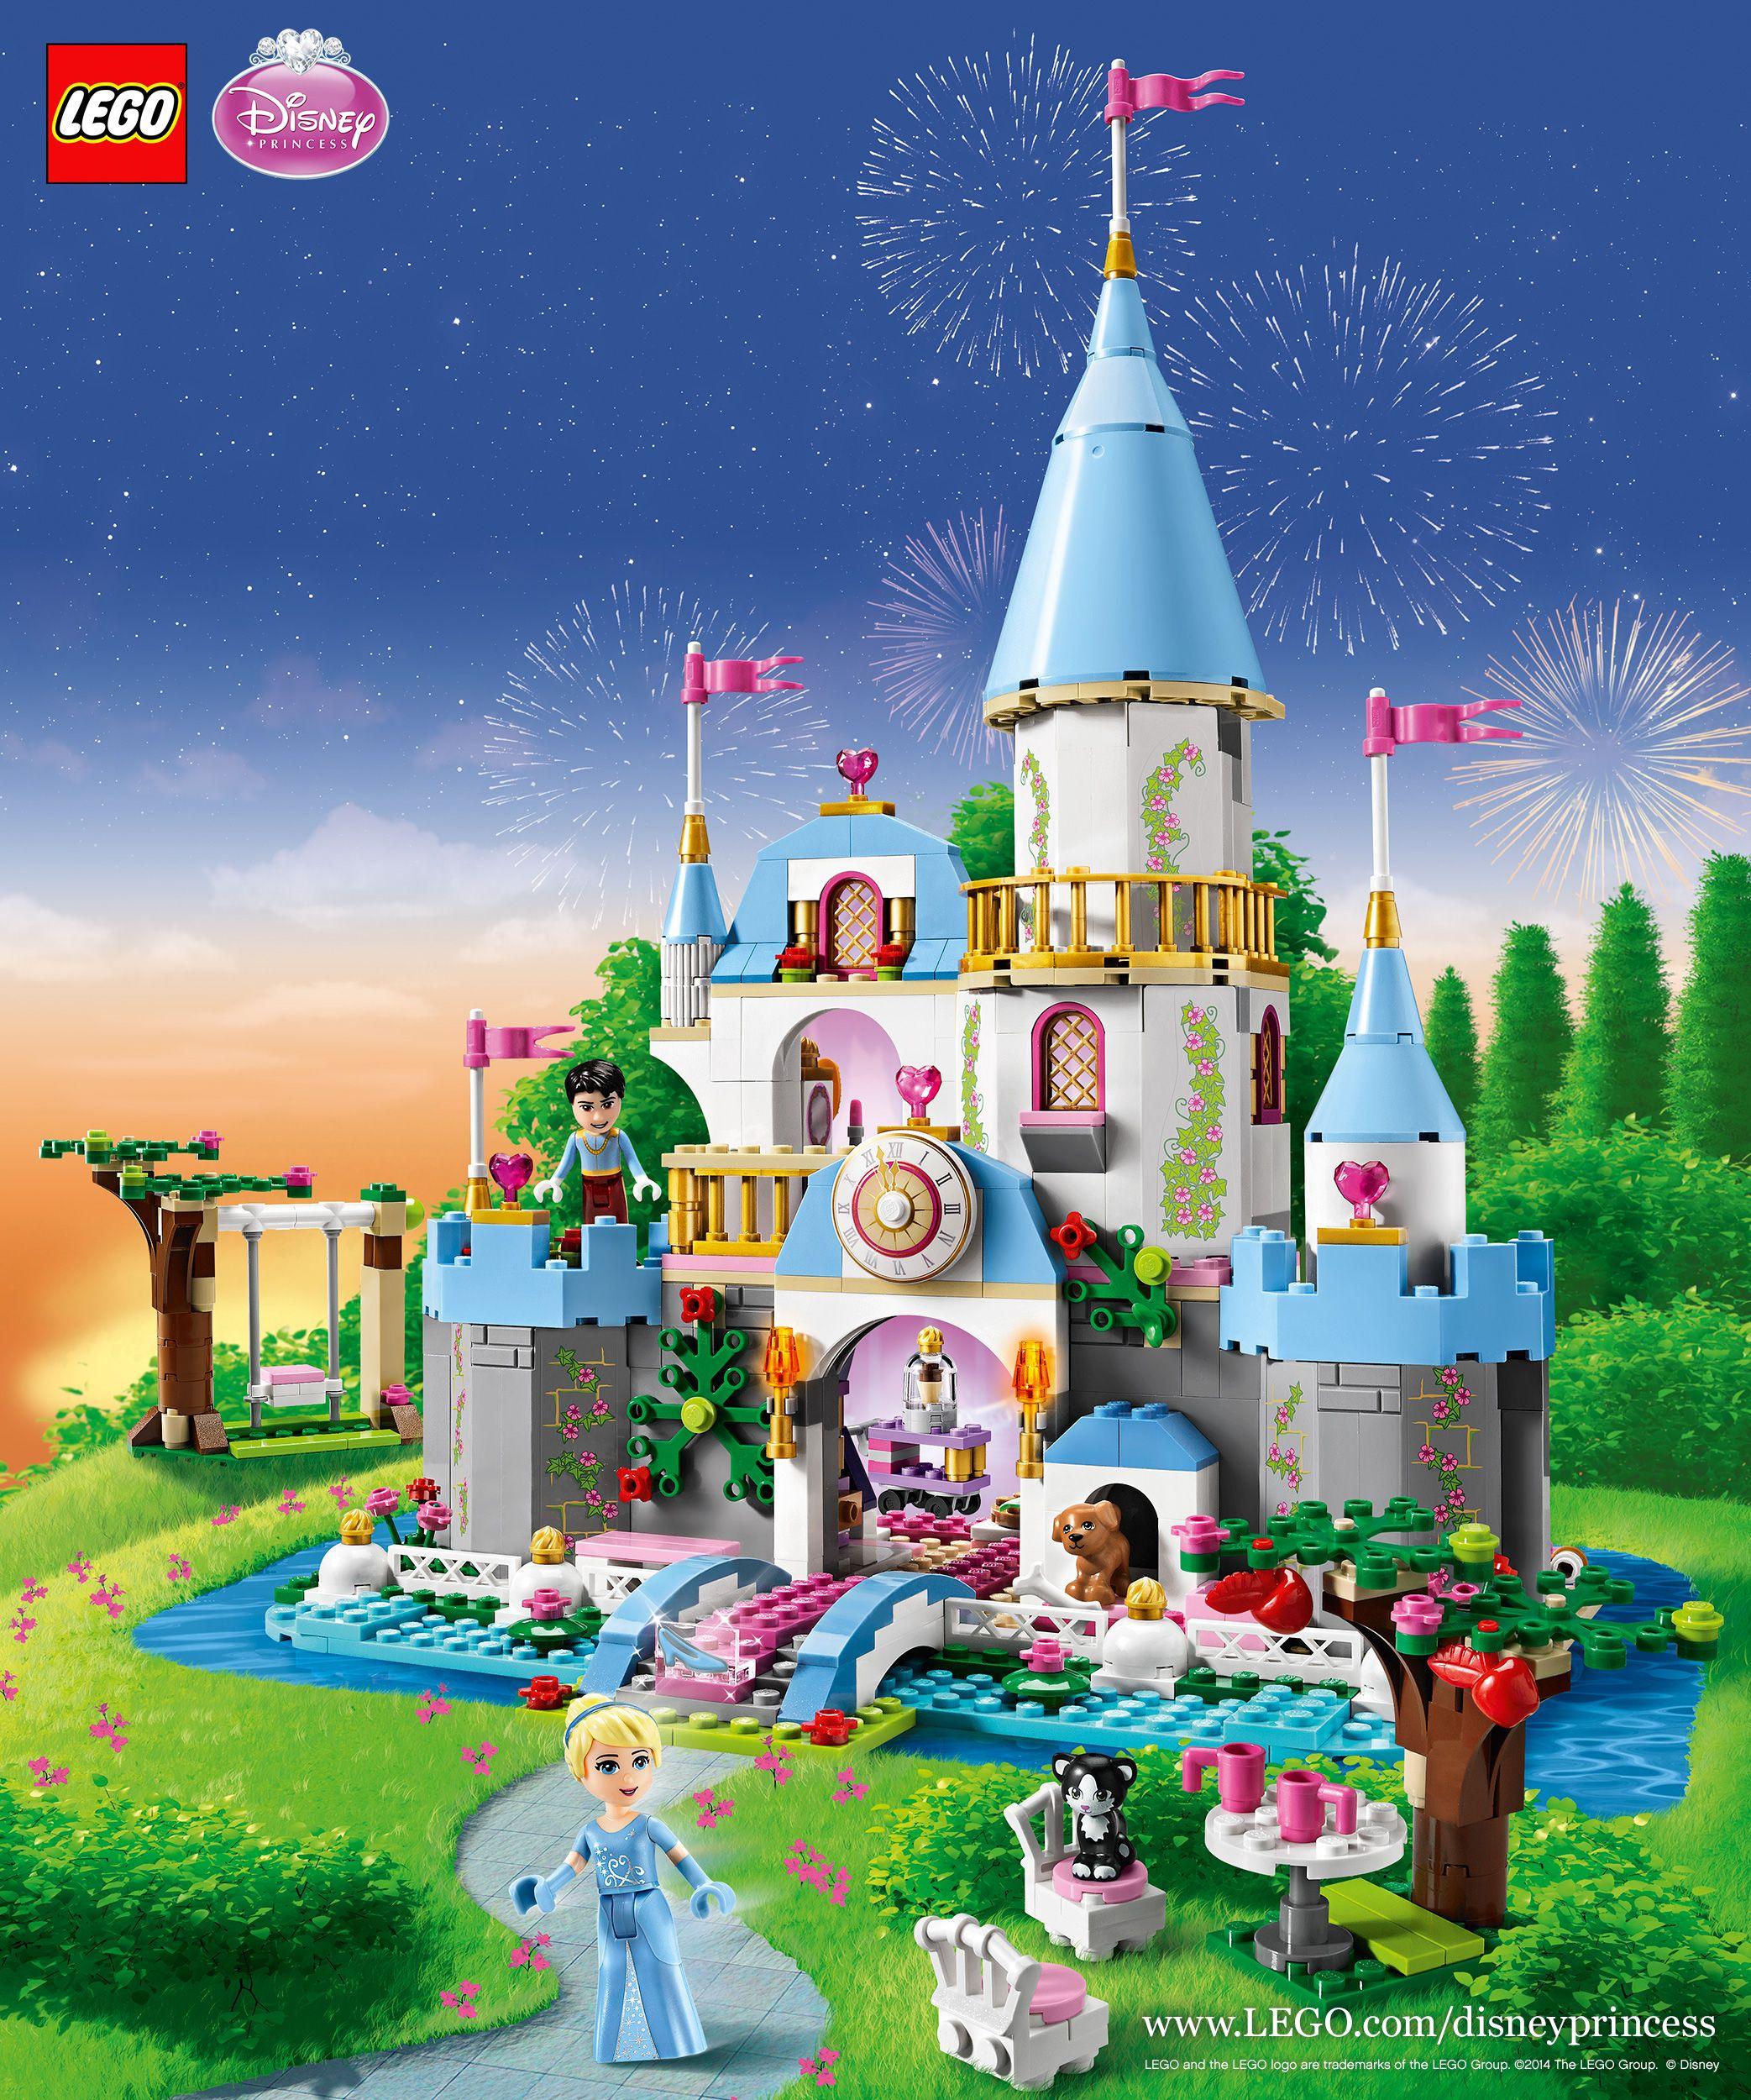 Cinderella's amazing castle wallpaper